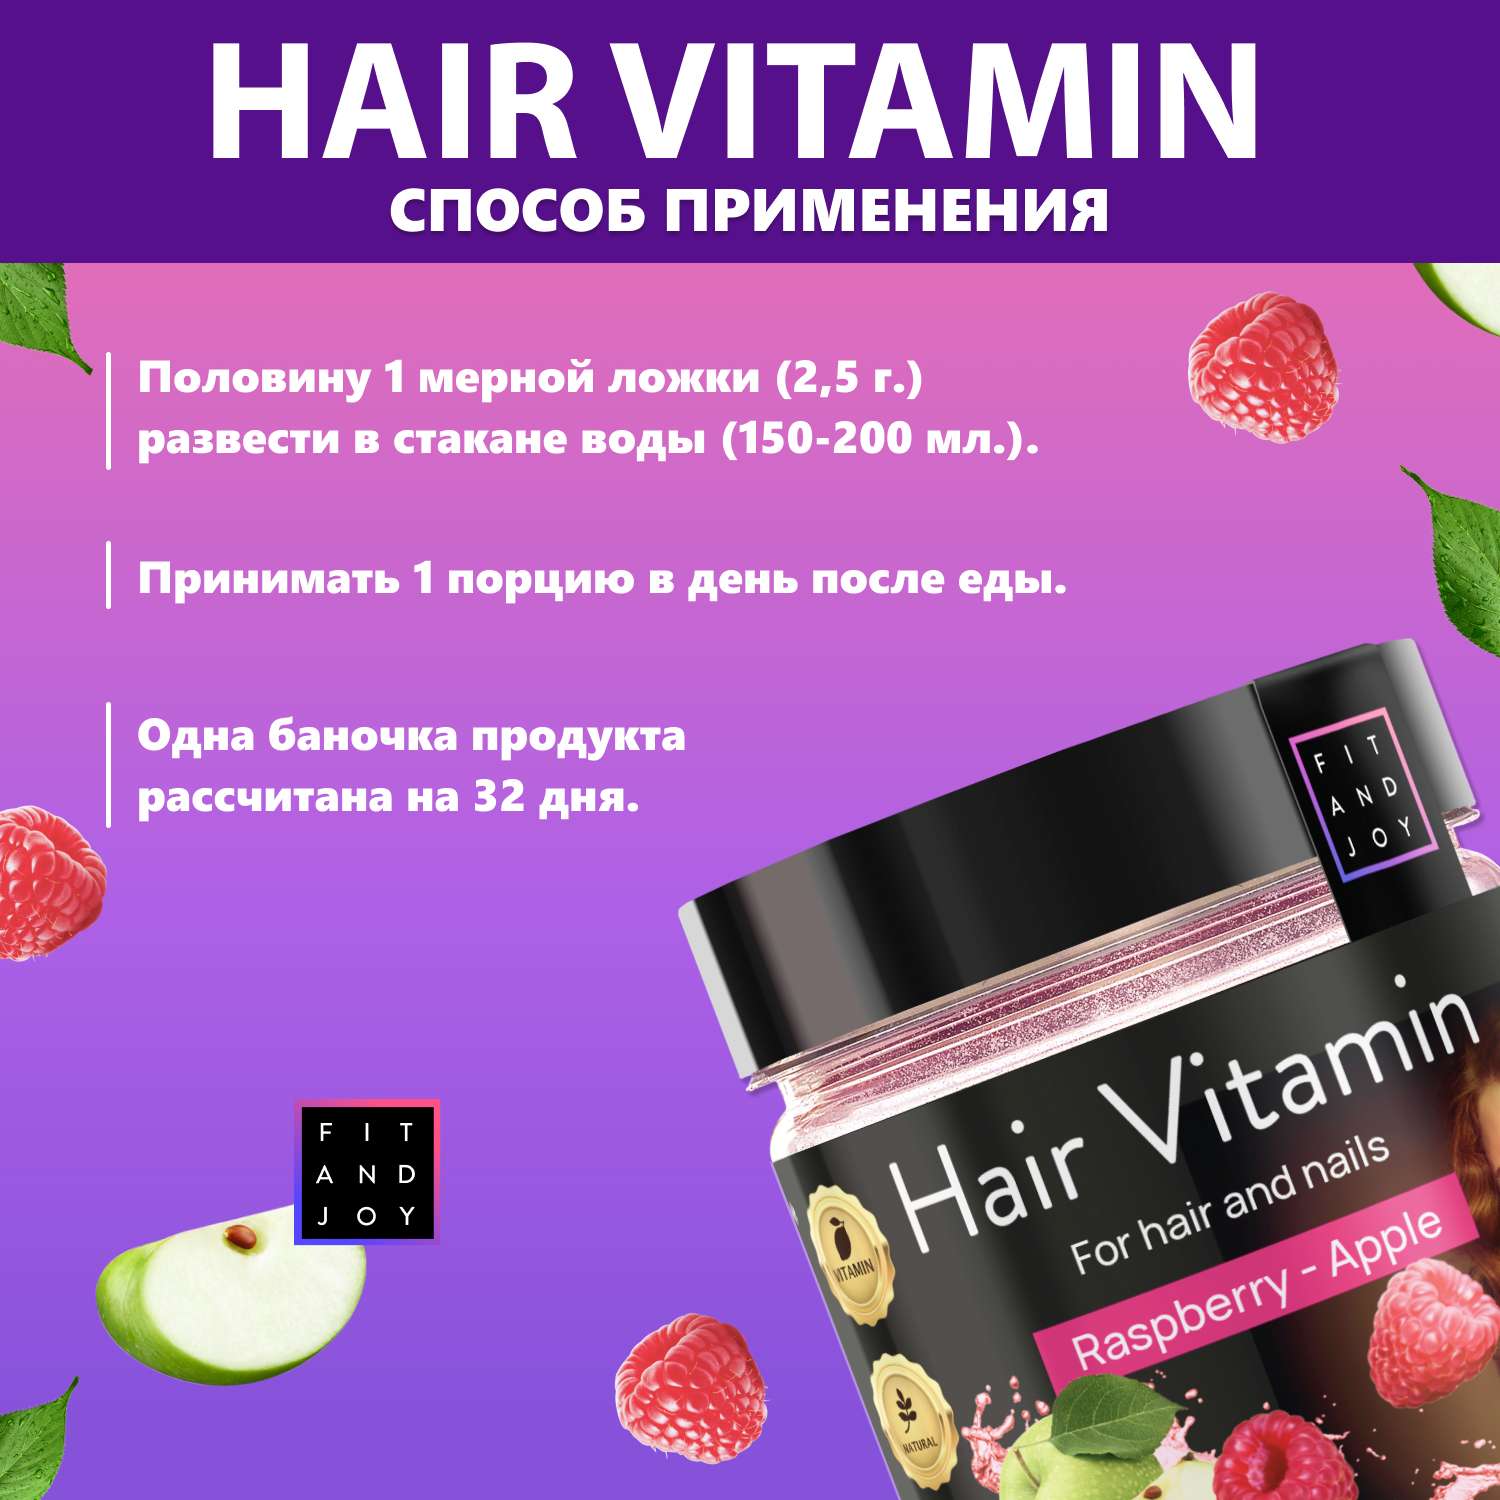 Витаминный комплекс FIT AND JOY Hair Vitamin - фото 5